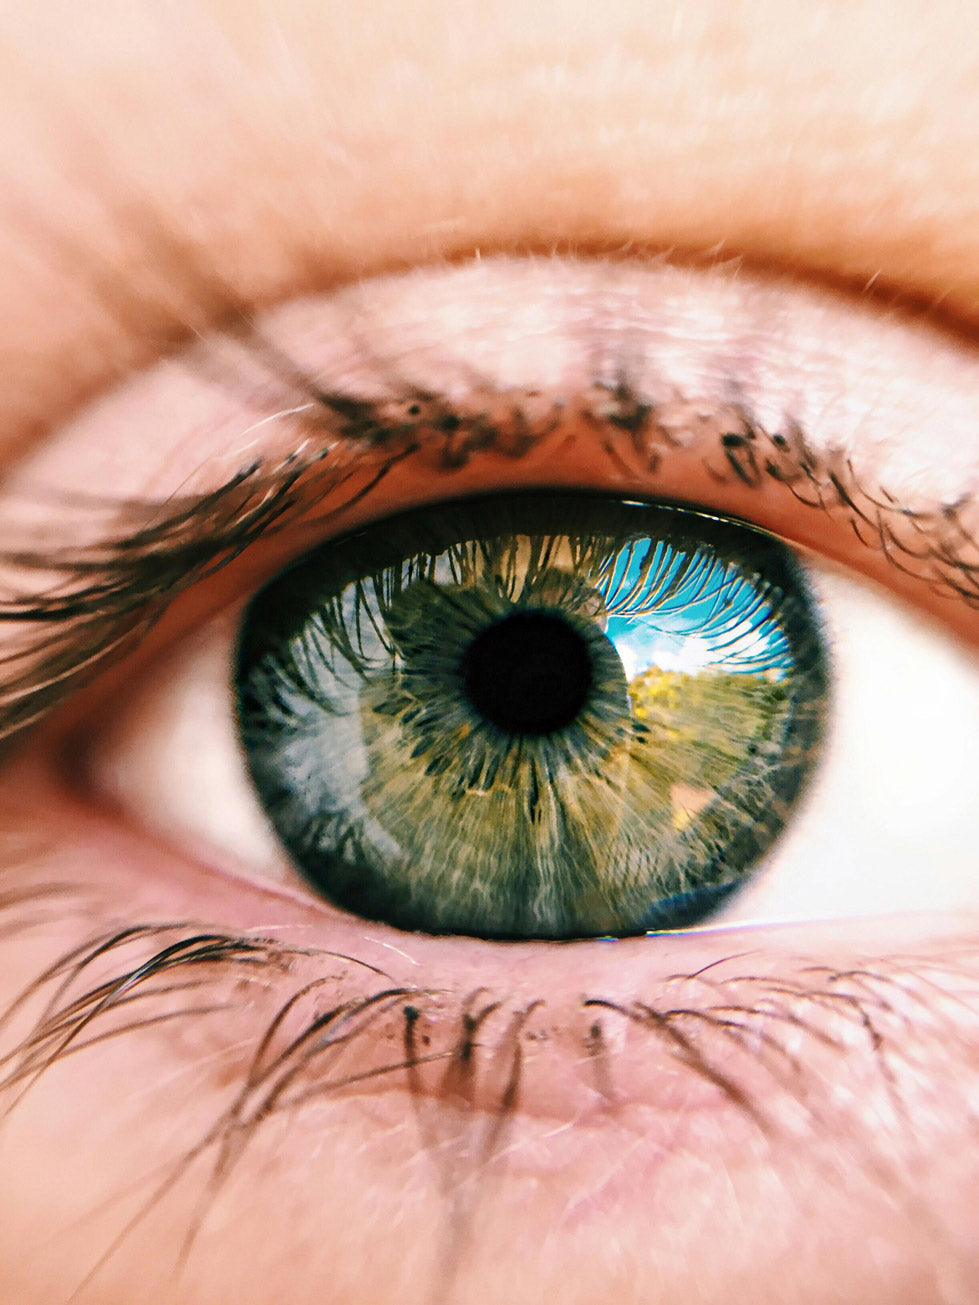 Blue eyes captured with Apexel's 100mm macro lens